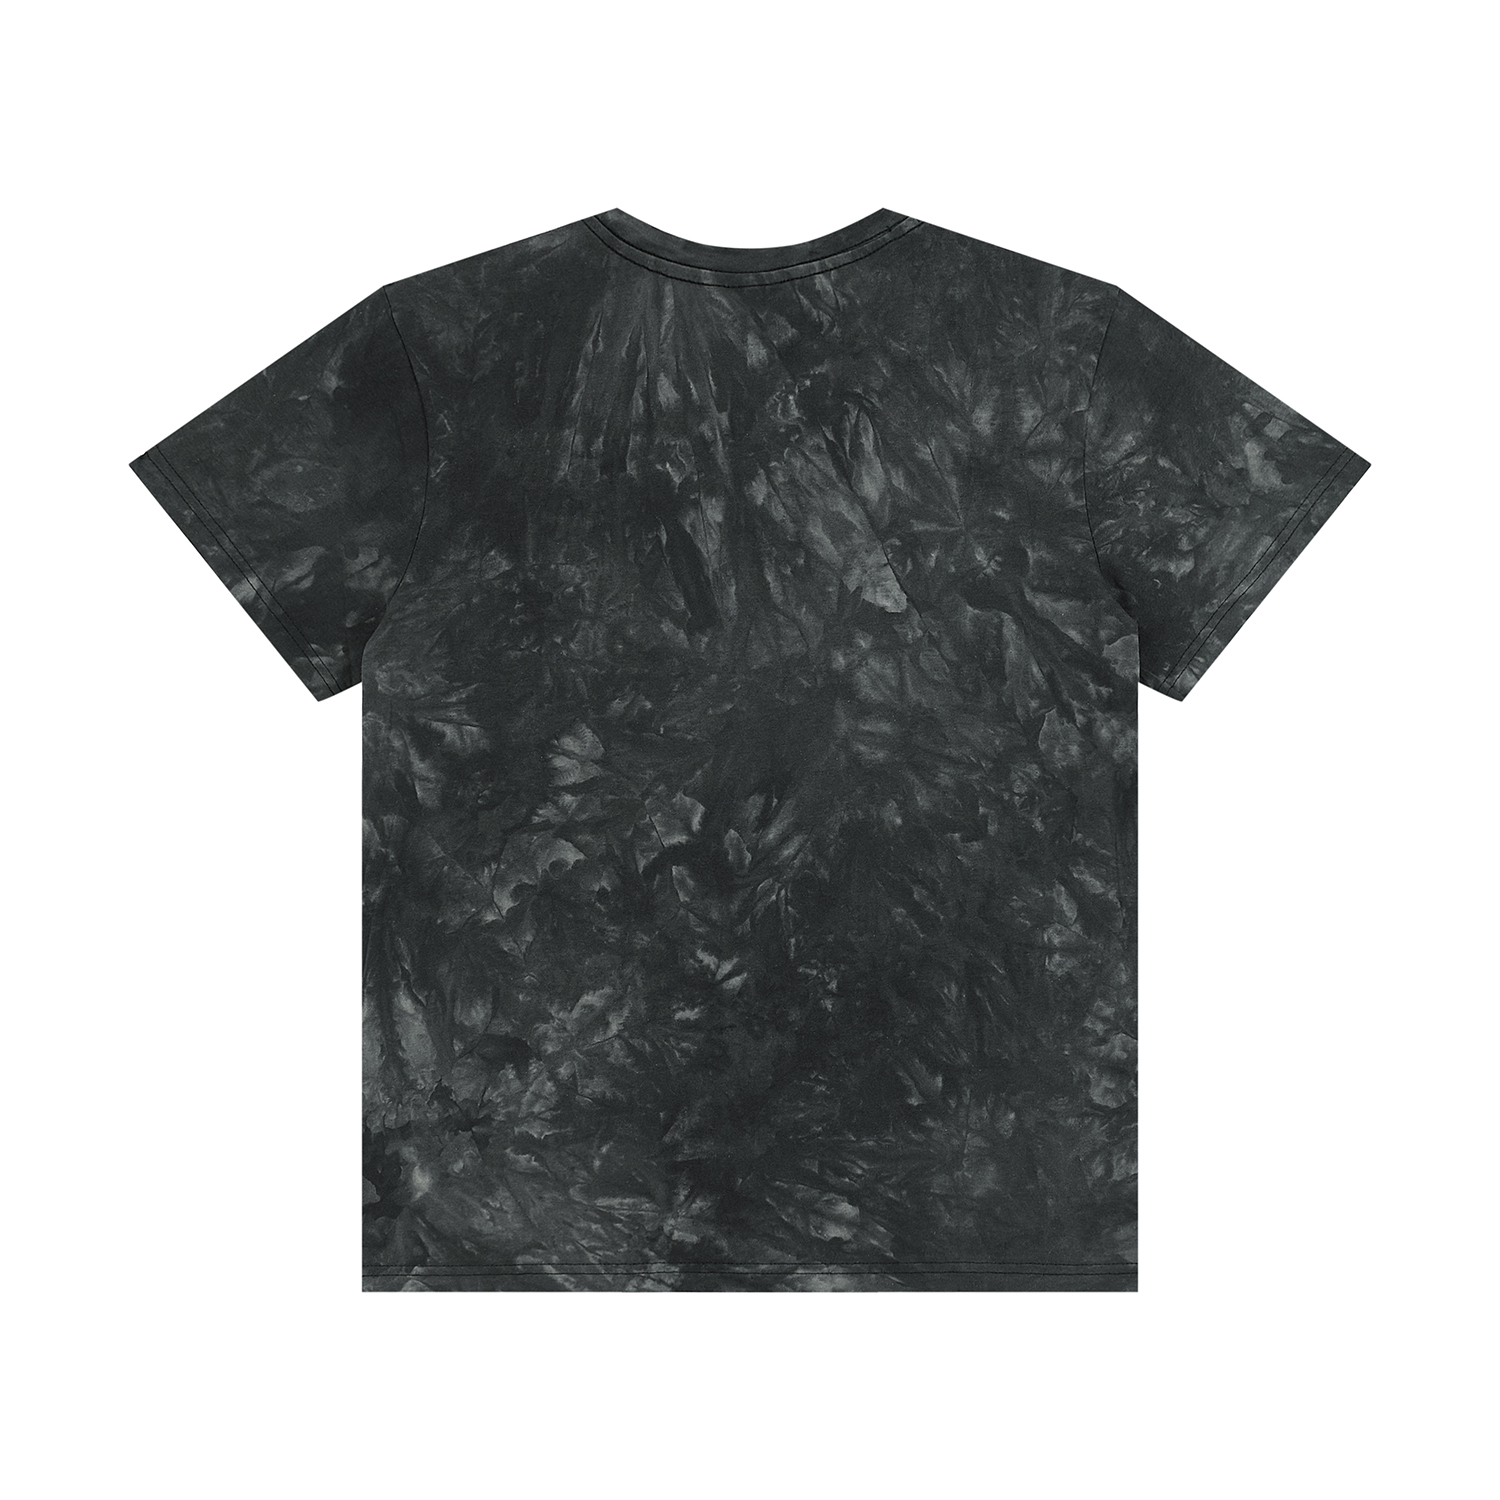 Streetwear Unisex Black and White Tie-Dye Tee - Print On Demand | HugePOD-2